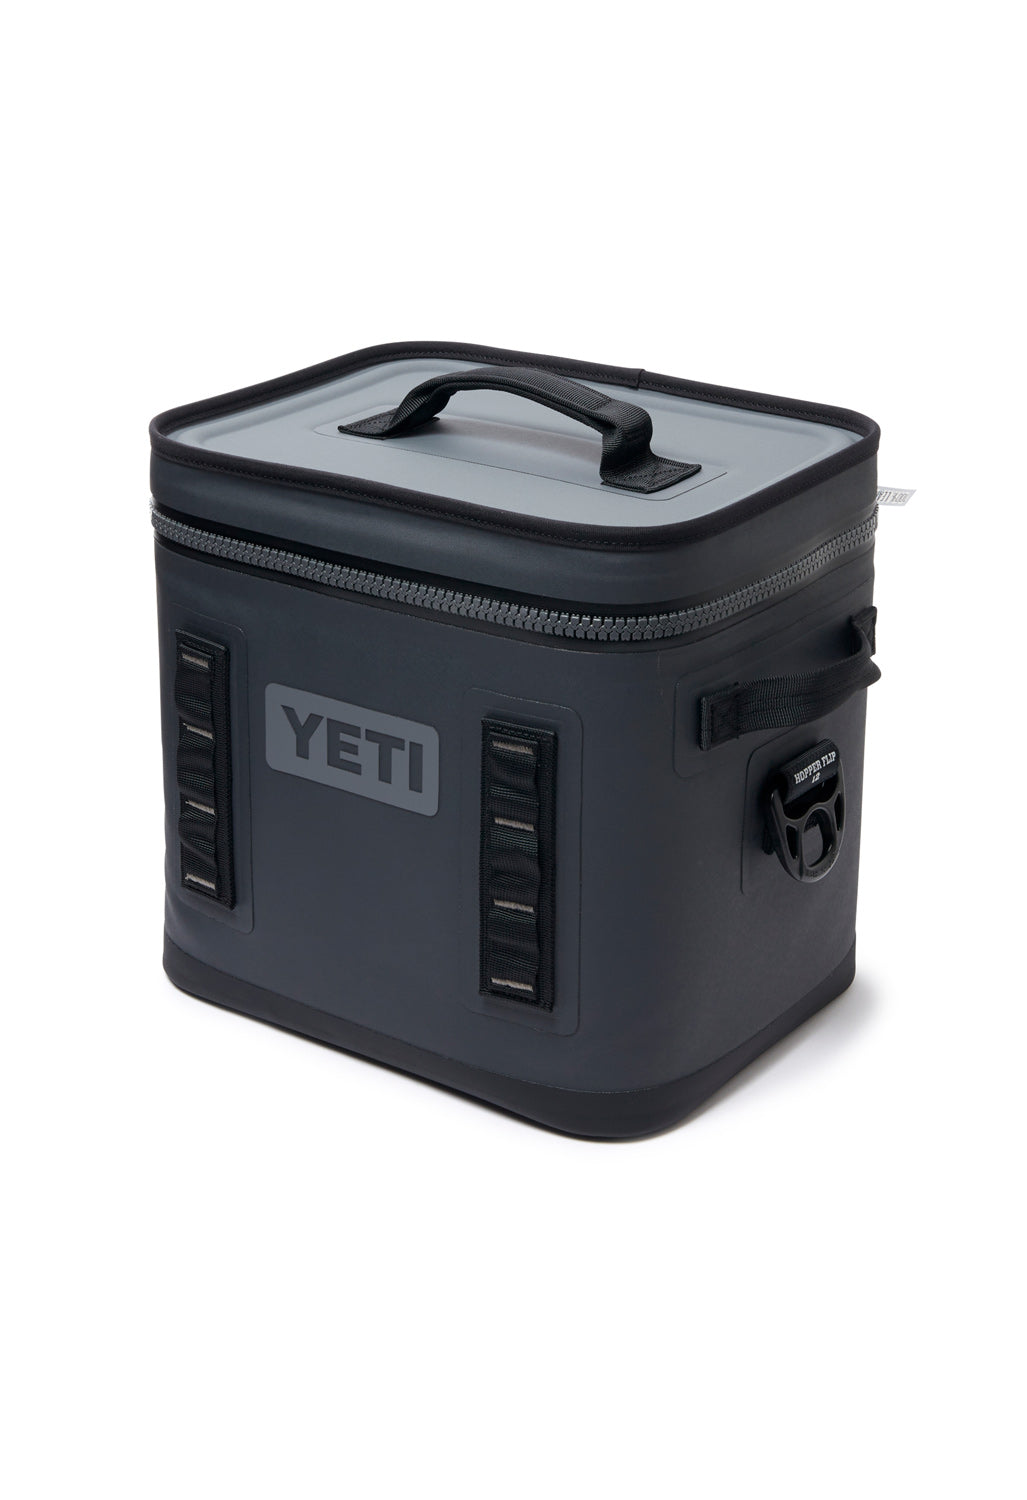 Yeti - Hopper Flip 12 Soft Cooler - Charcoal